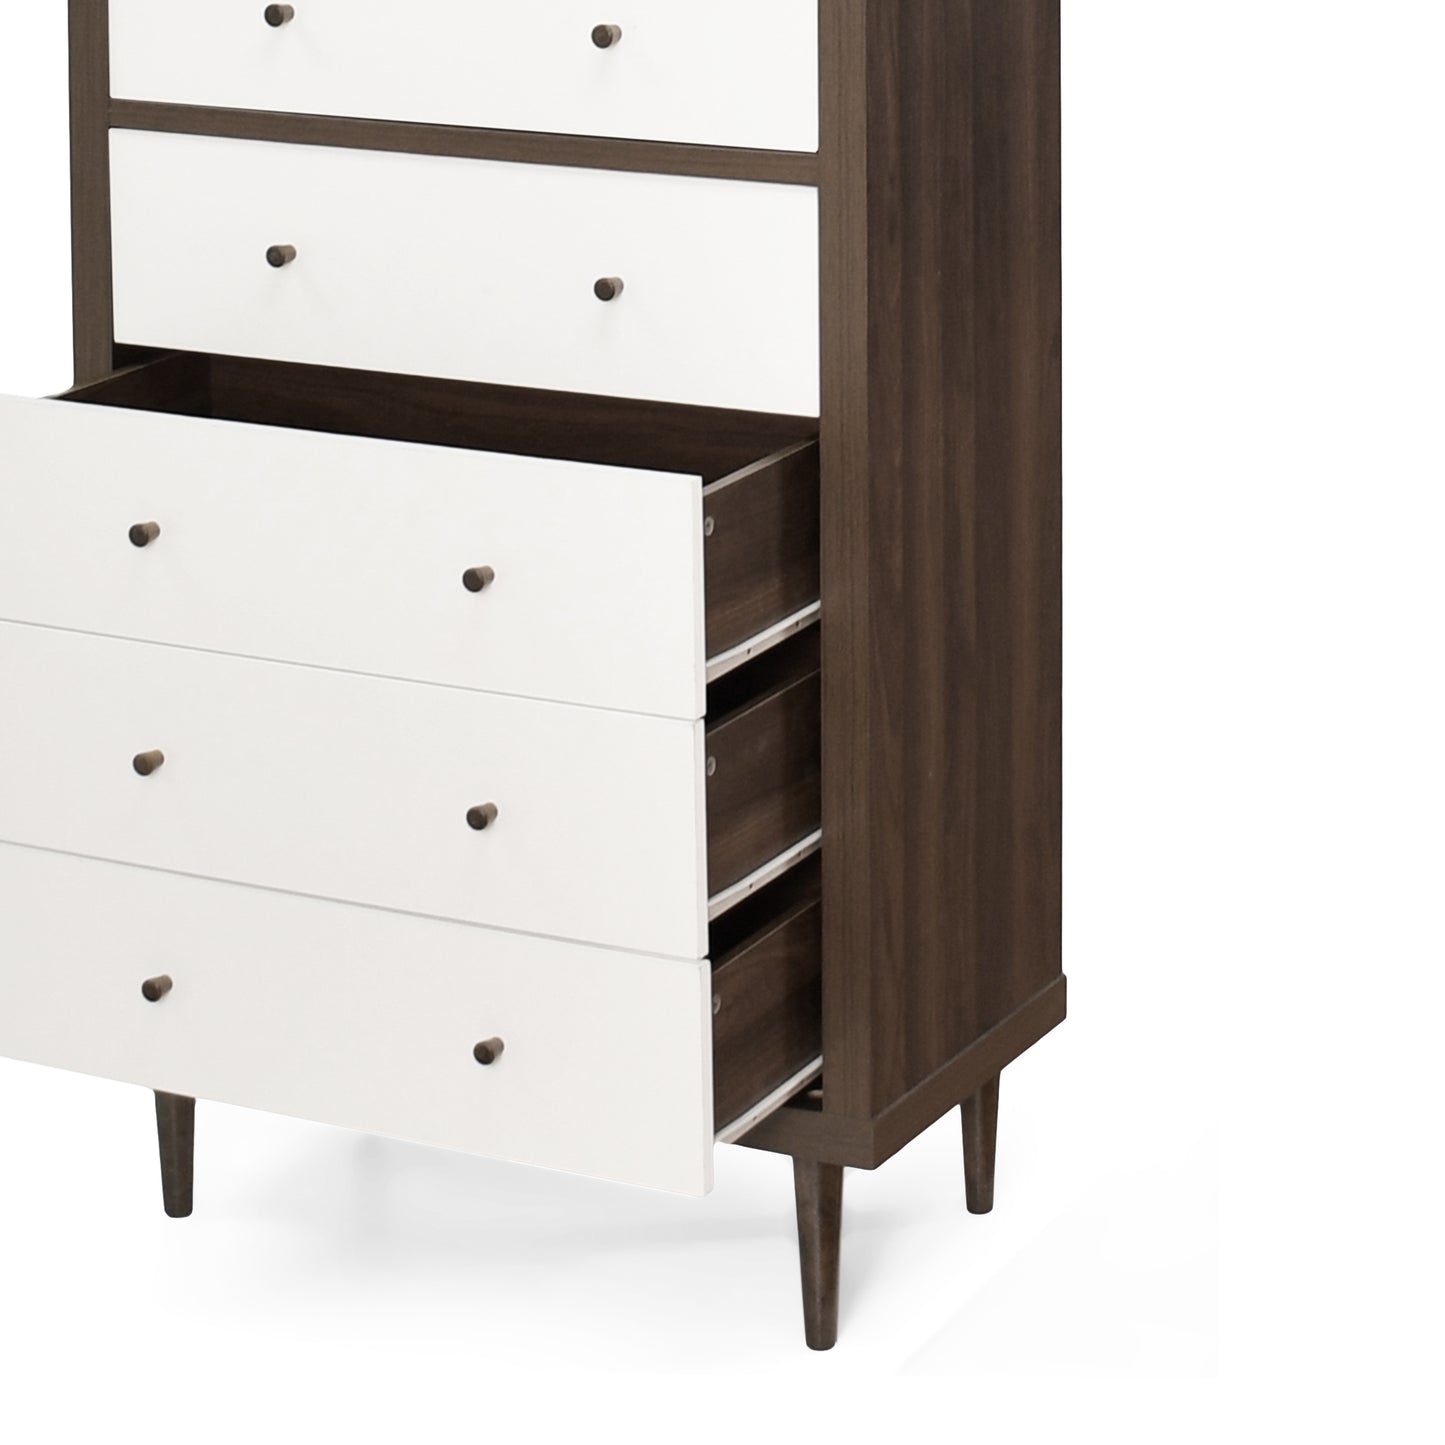 Farhart Mid Century Modern 5 Drawer Dresser